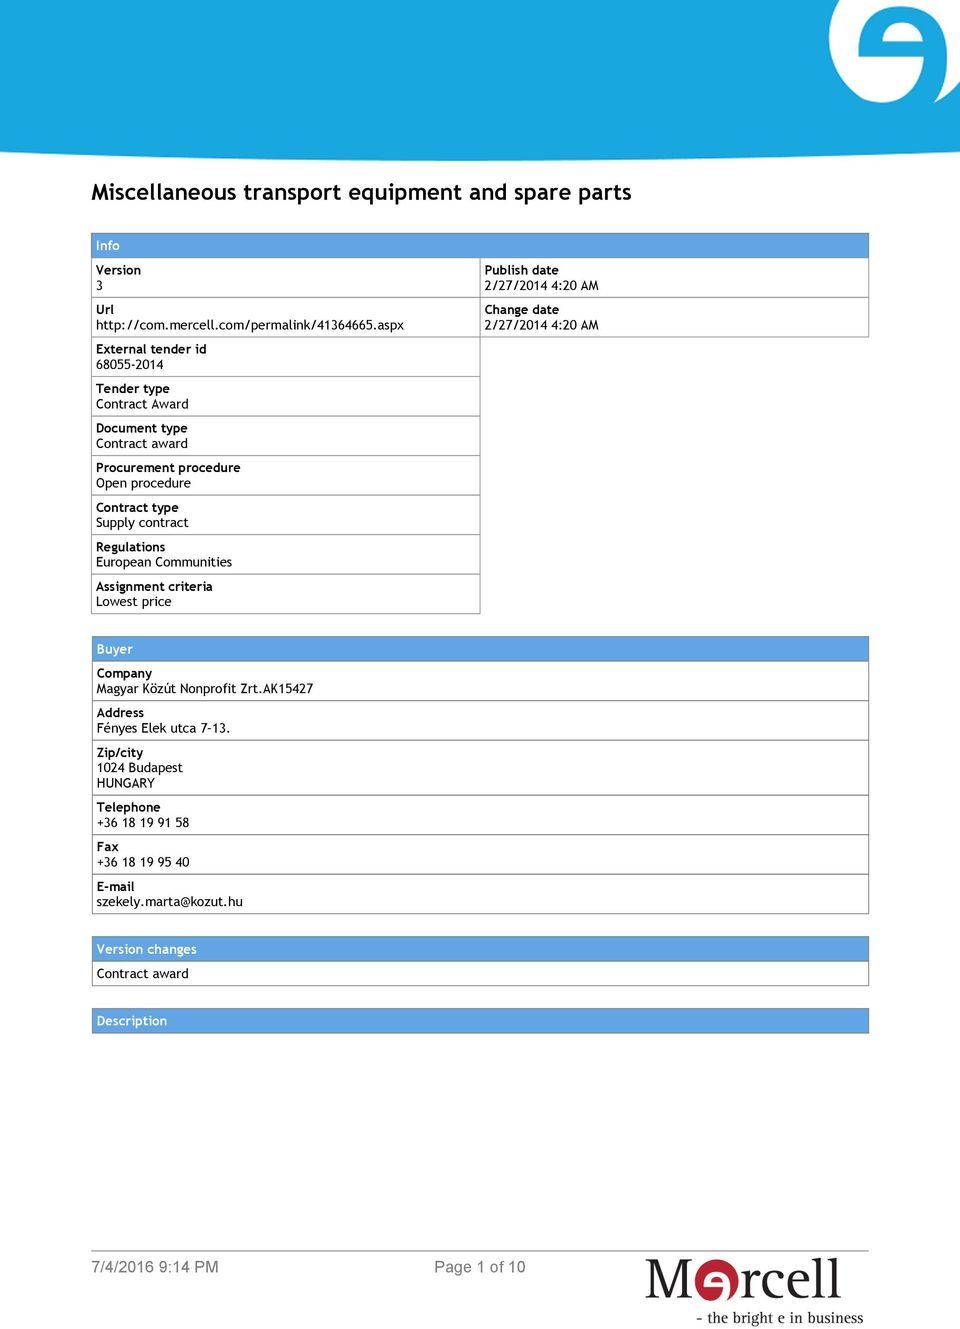 Regulations European Communities Assignment criteria Lowest price Publish date 2/27/2014 4:20 AM Change date 2/27/2014 4:20 AM Buyer Company Magyar Közút